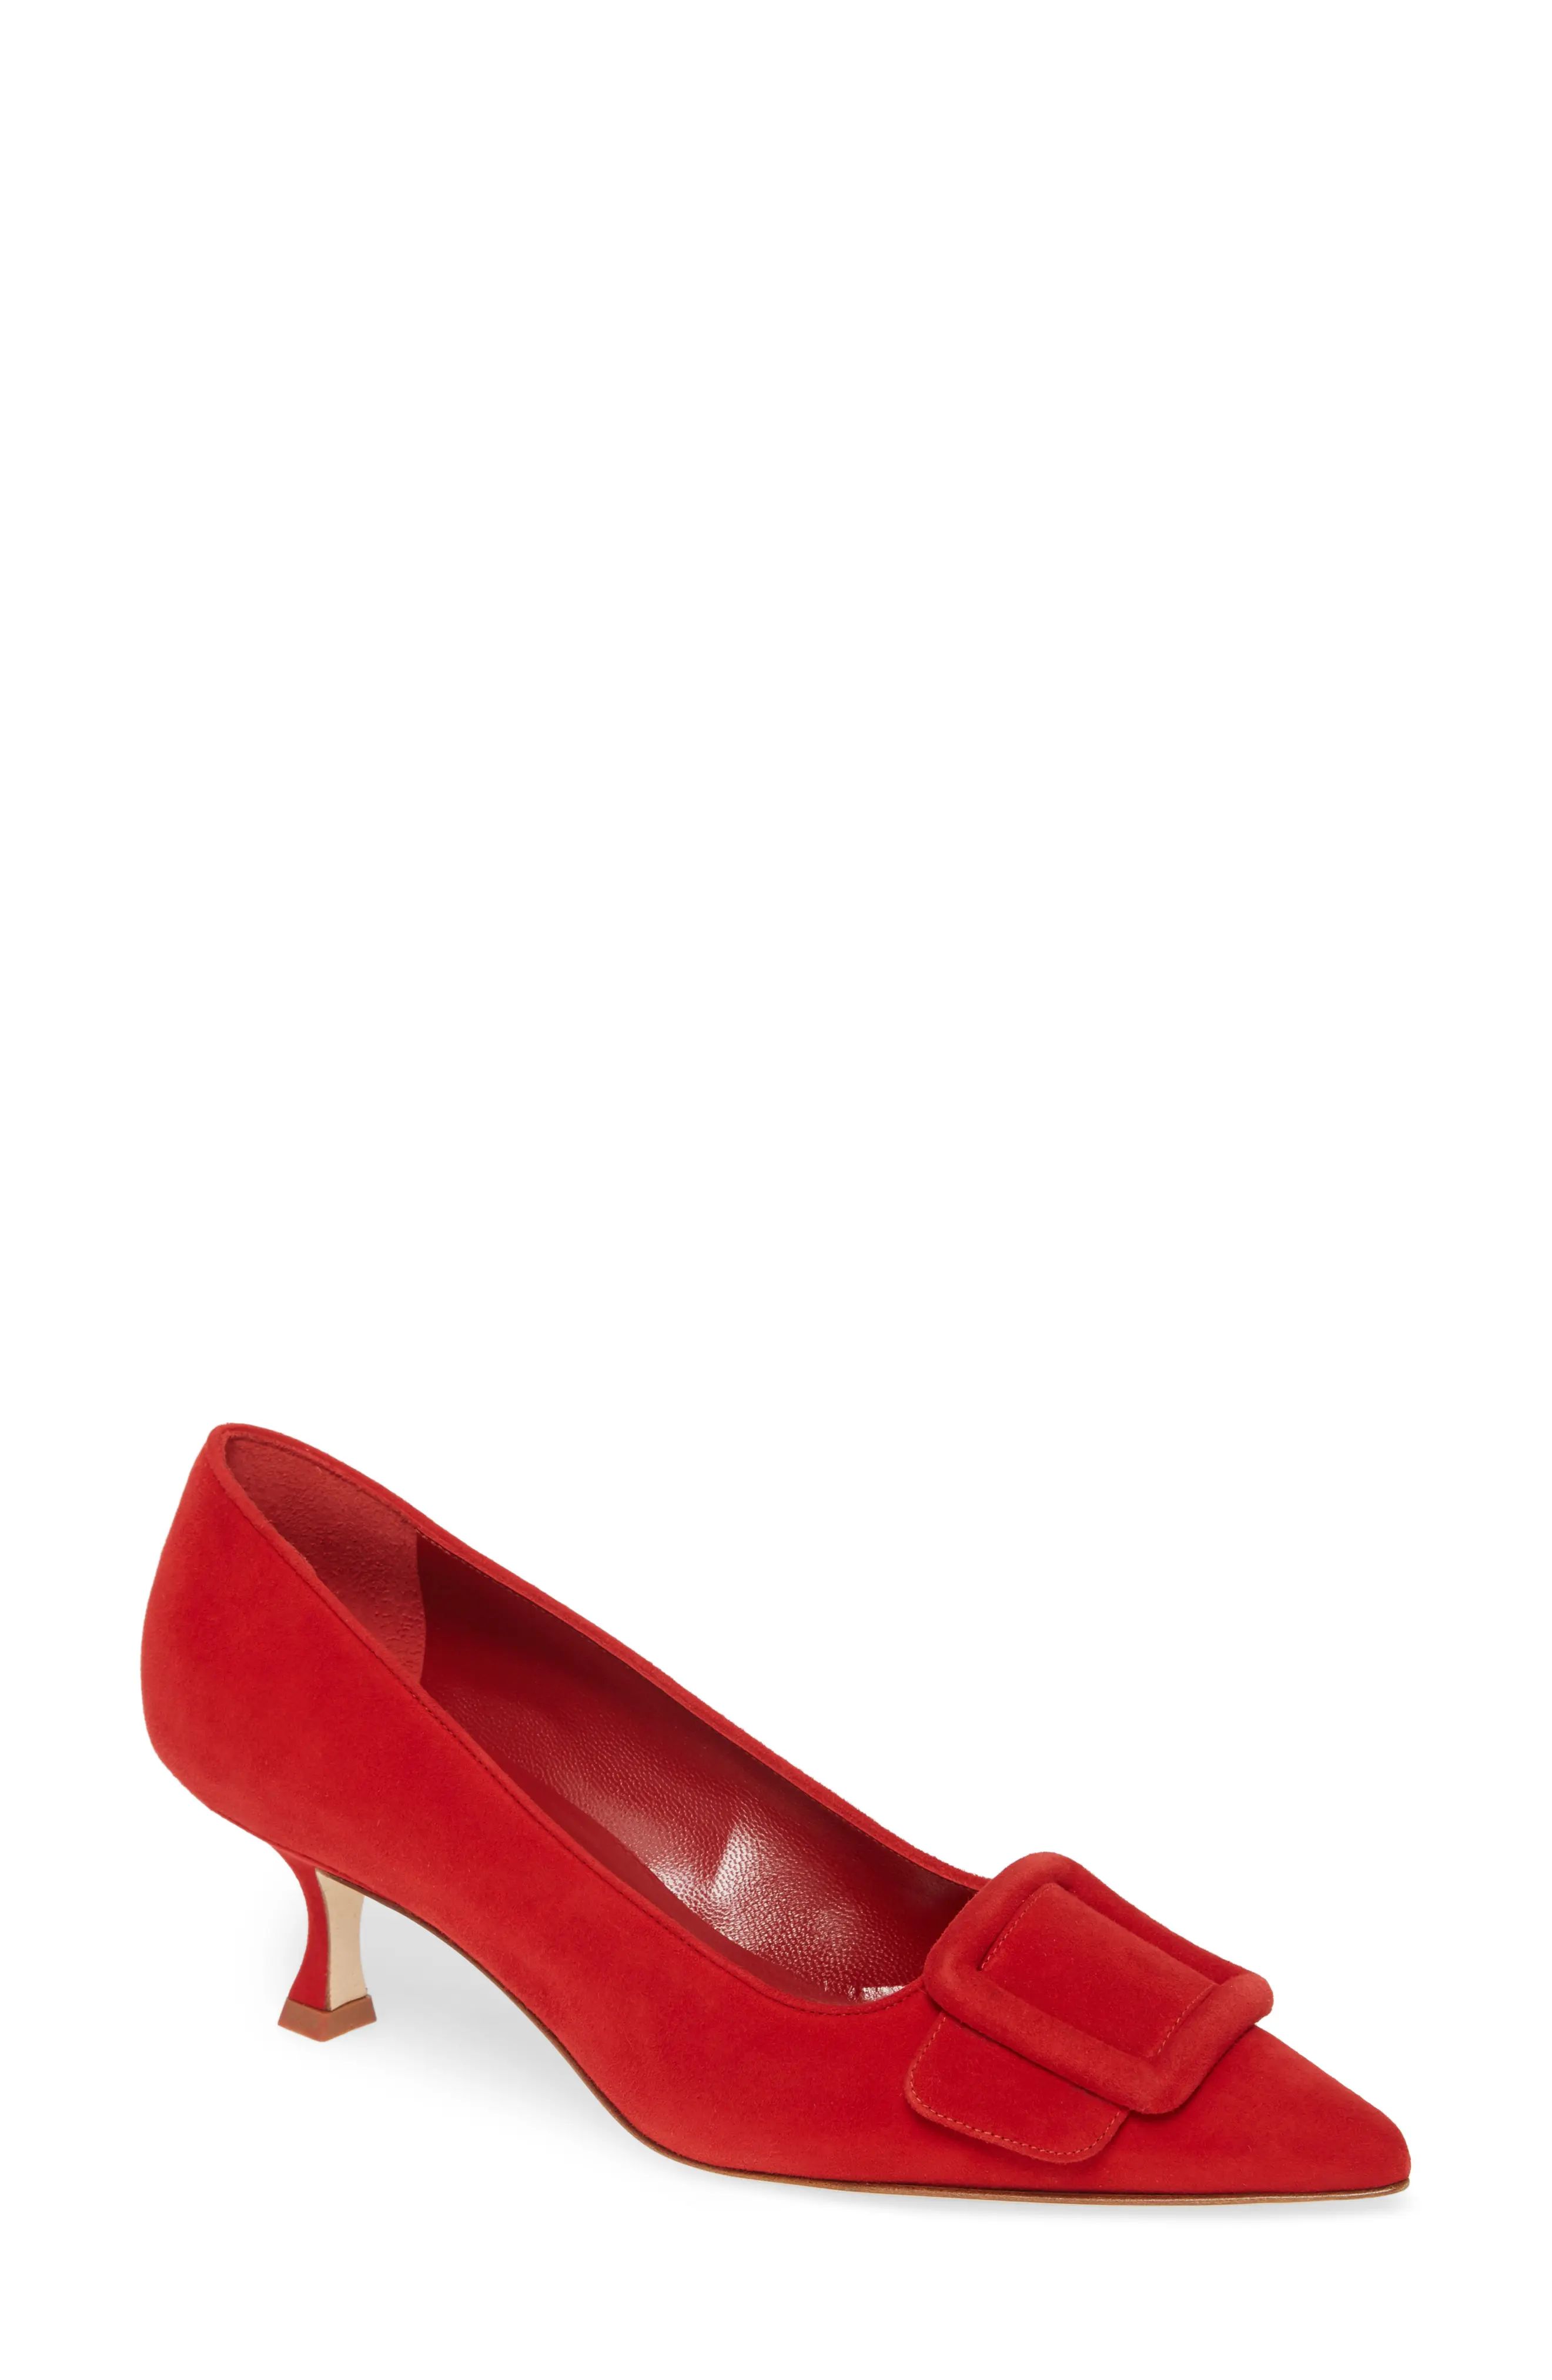 Women's Manolo Blahnik Maysale Buckle Pointed Toe Pump, Size 5US - Red | Nordstrom